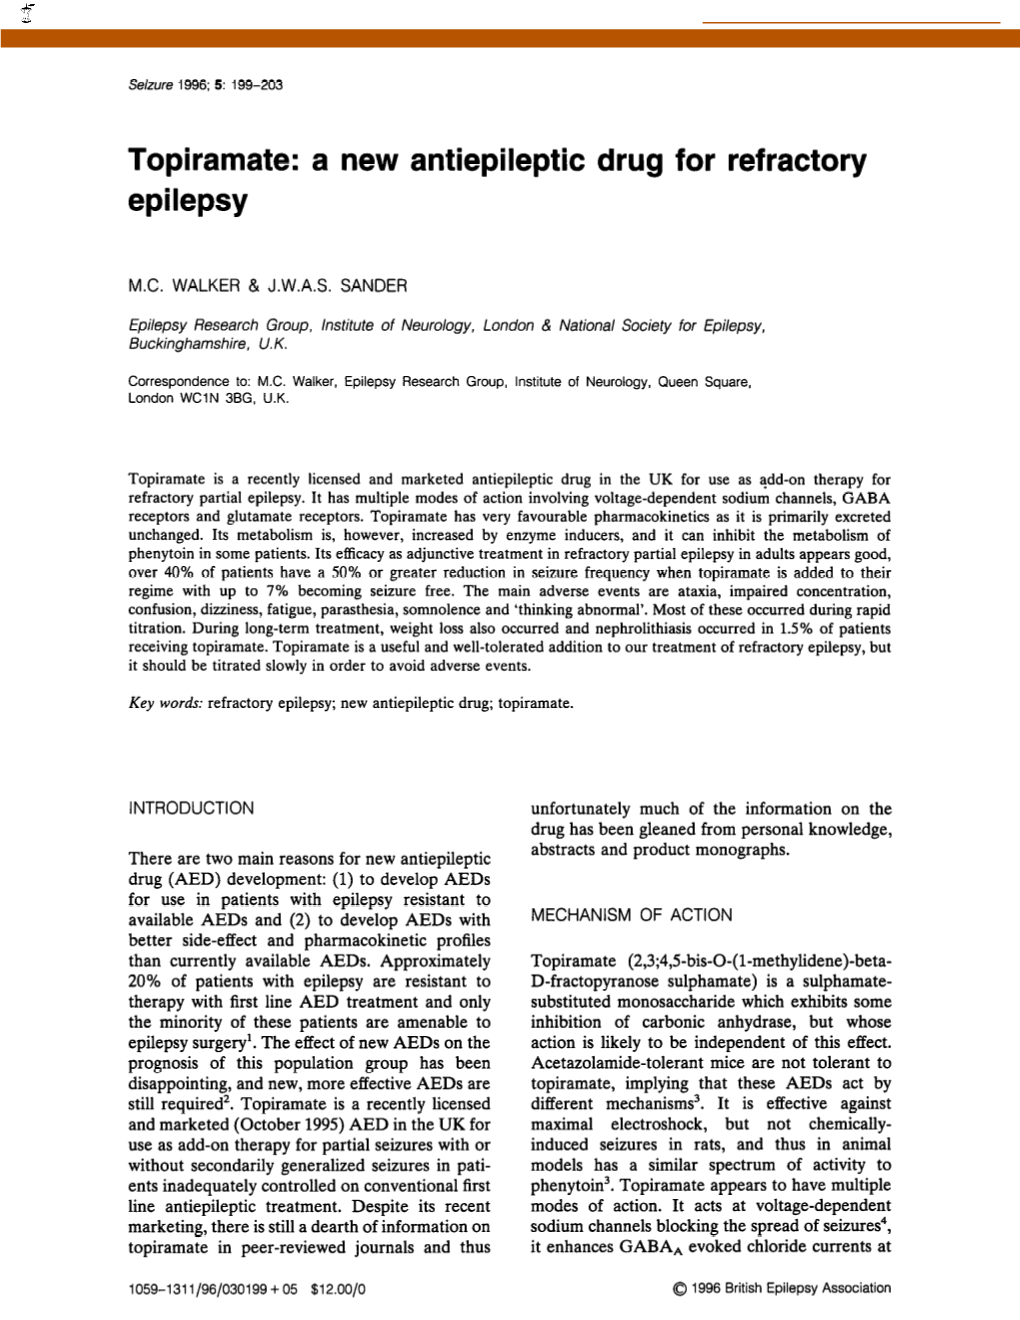 Topiramate: a New Antiepileptic Drug for Refractory Epilepsy